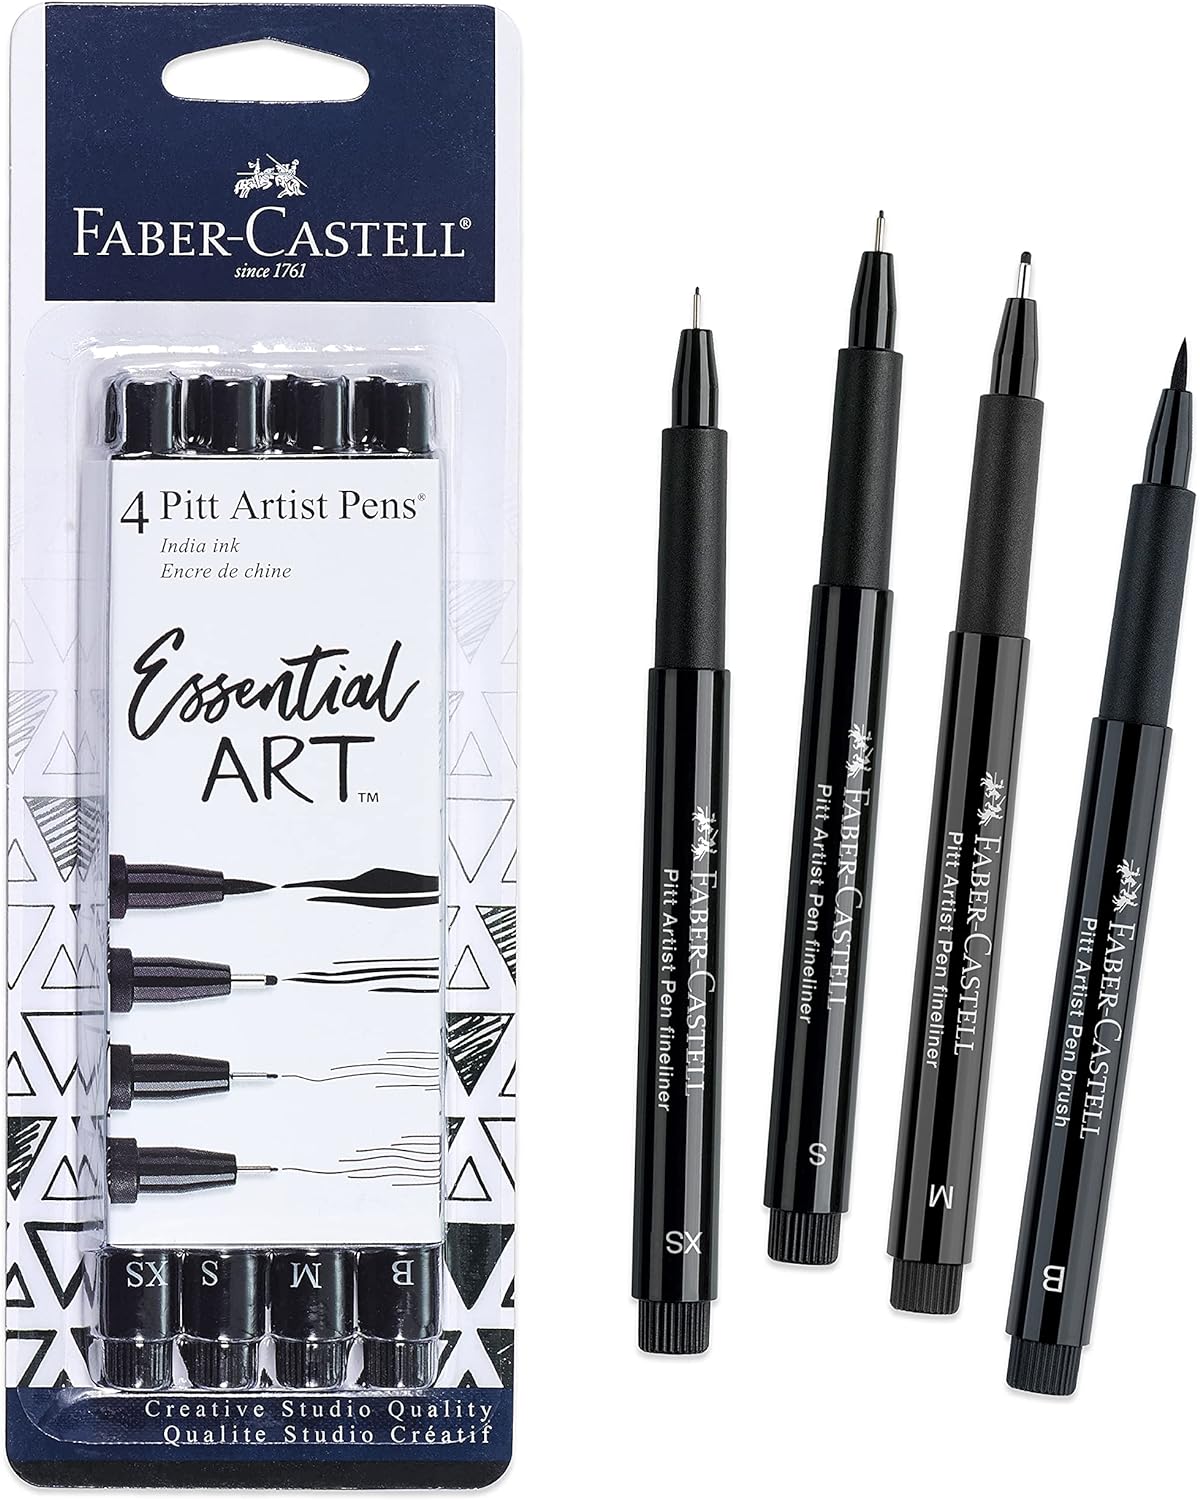 Faber-Castell Indian Ink PITT Artist Pen Fineliner - Black XS